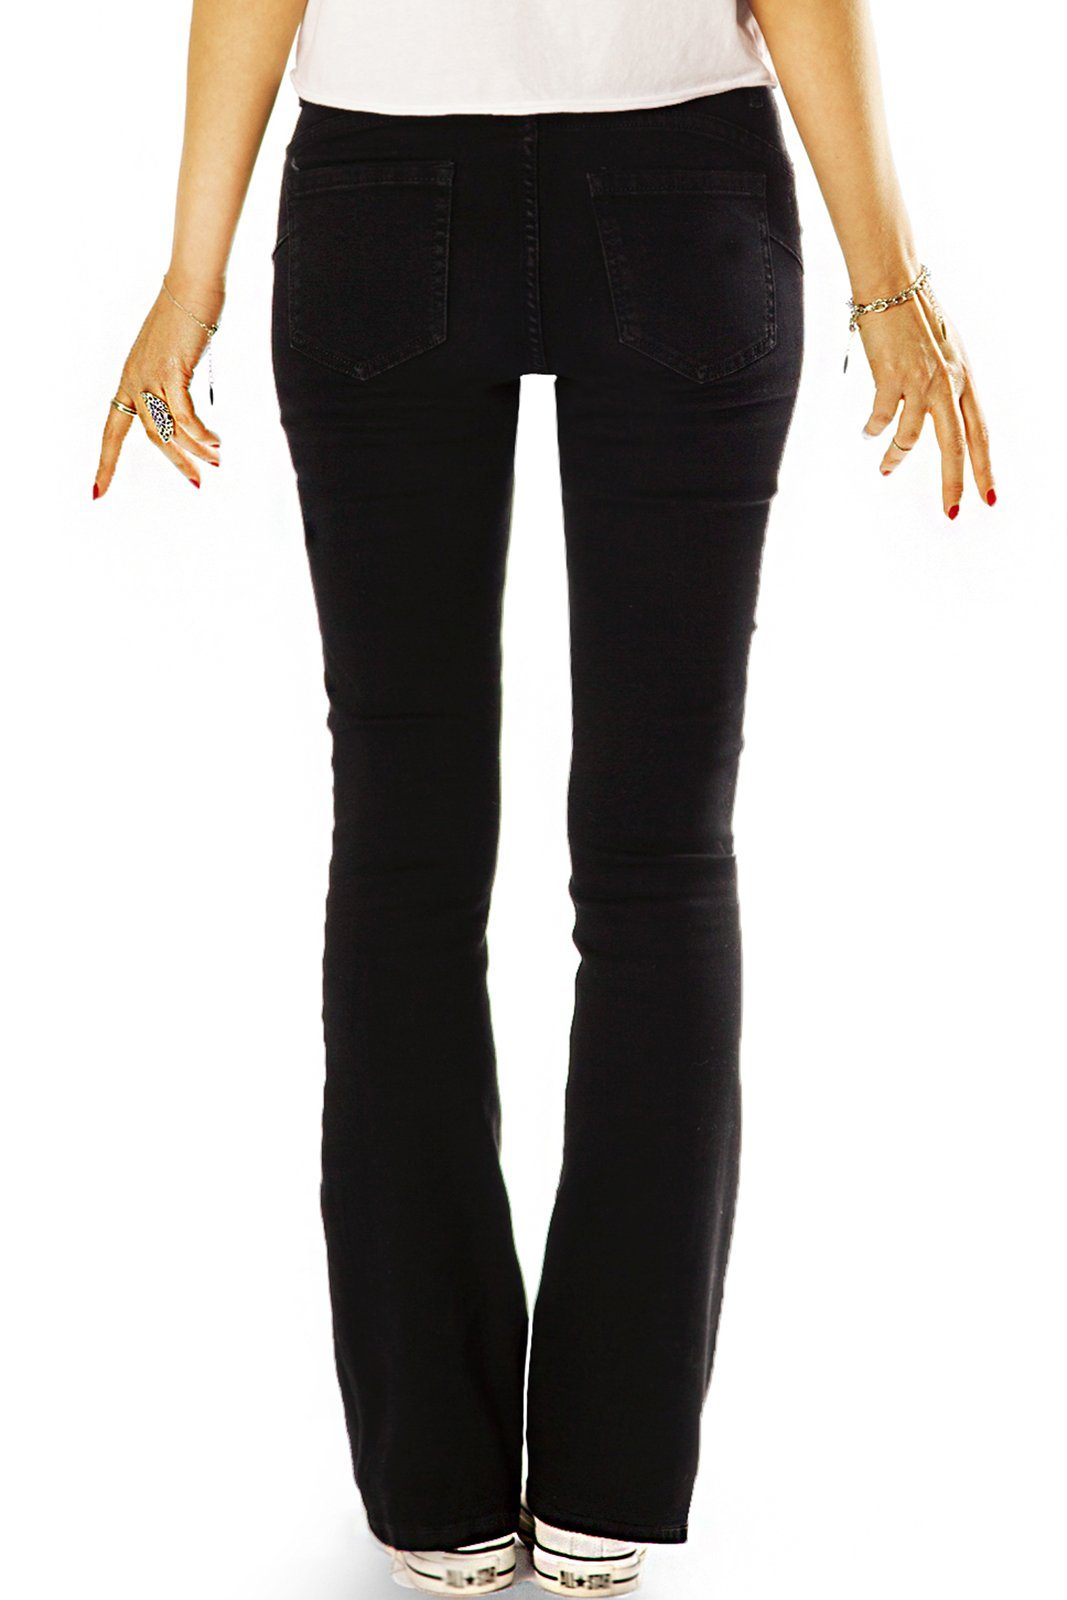 stretchig Hose Jeans Stretch-Anteil, medium waist, Medium im Bootcut-Jeans styled Schlag Basic Cut 5-Pocket-Style, j2L-1 bequem, Damen - Waist Boot mit be